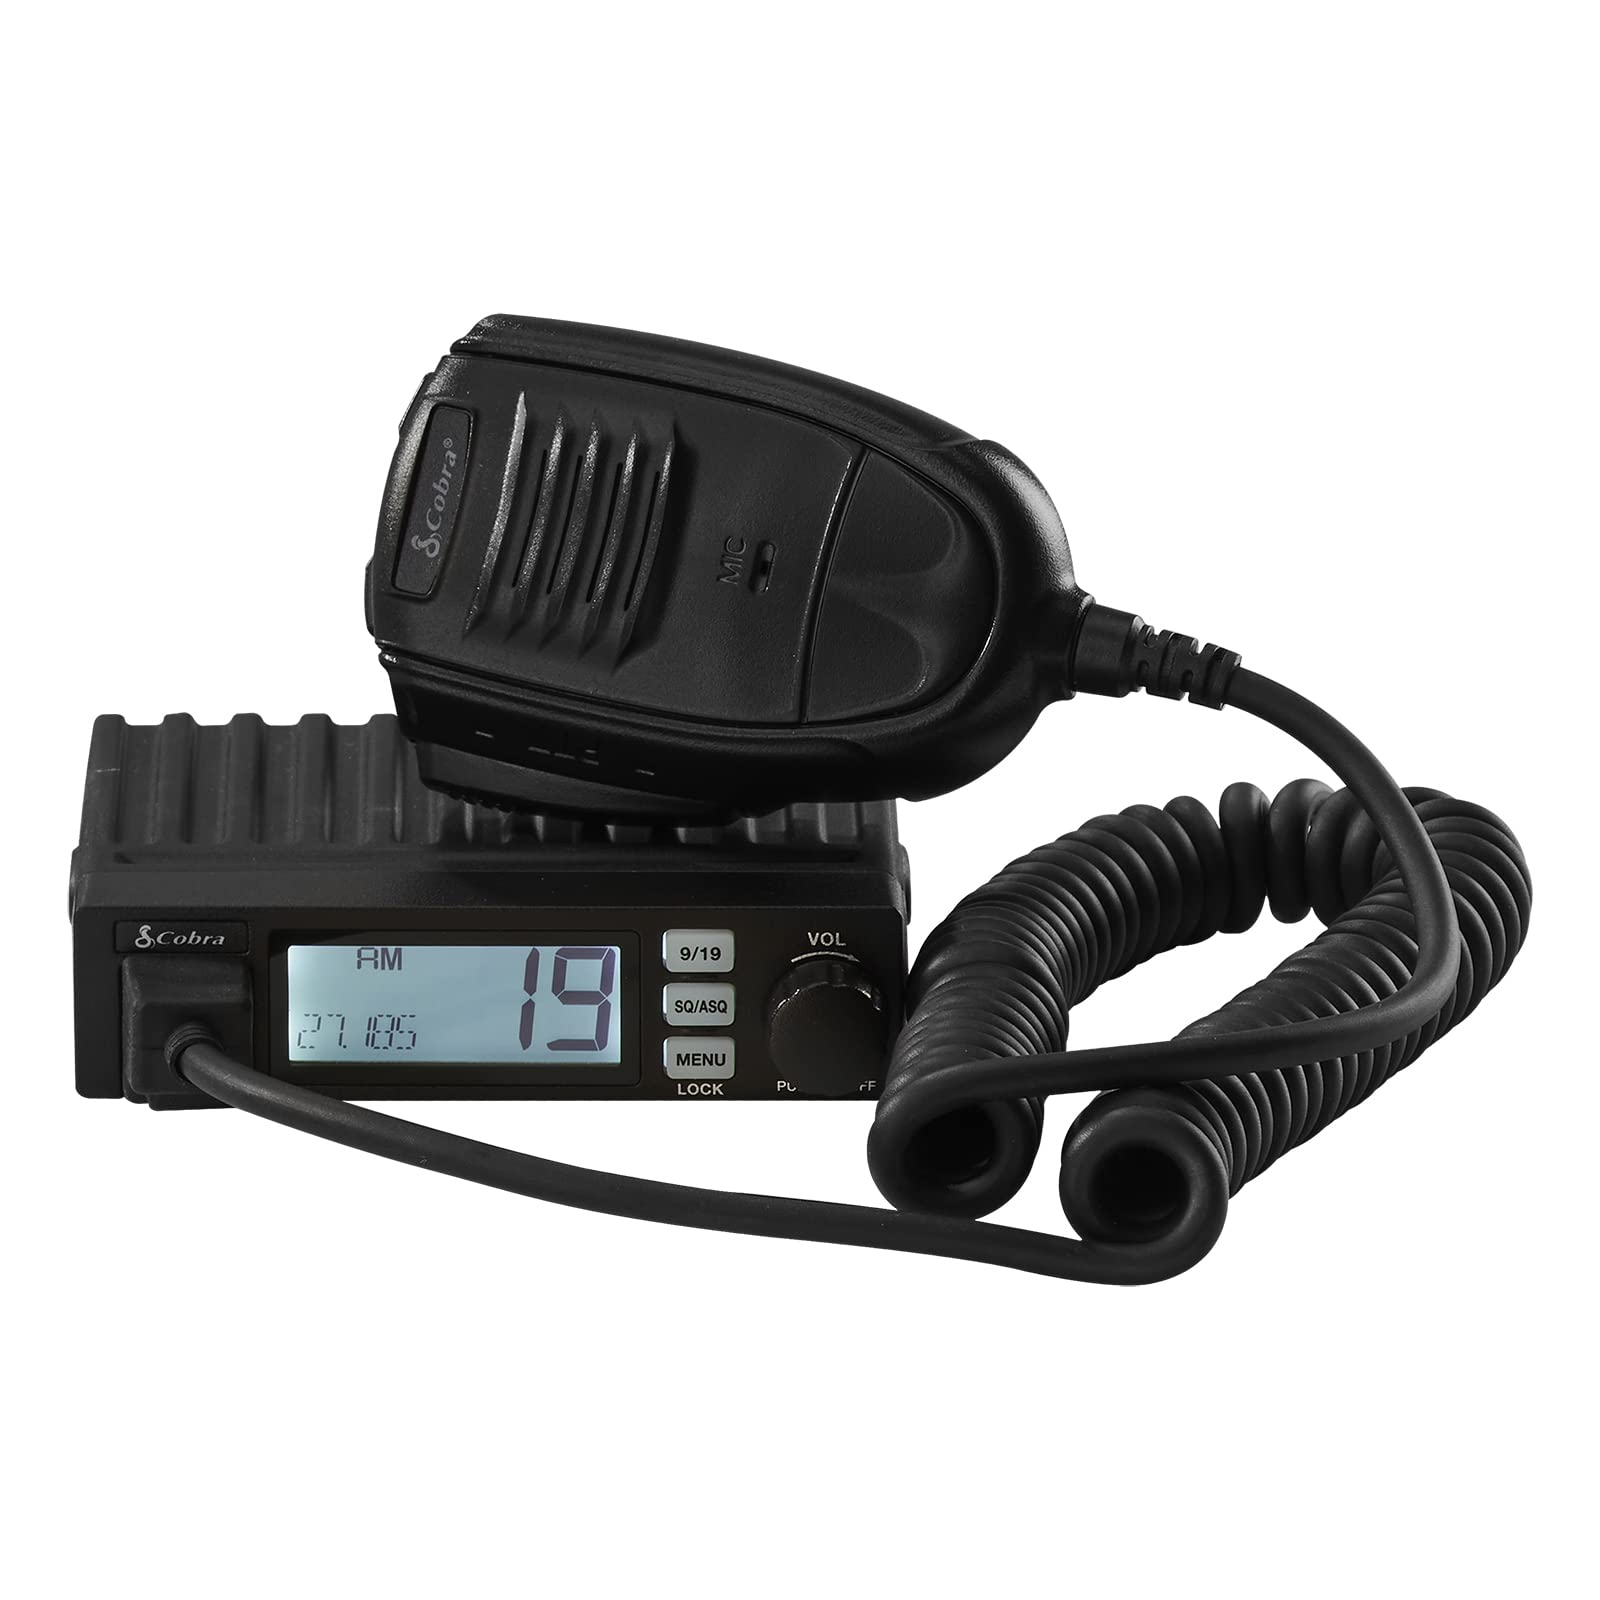 Cobra 19 MINI Recreational CB Radio - 40 Channels, Easy to Operate (Black) $39.95 + Free Shipping